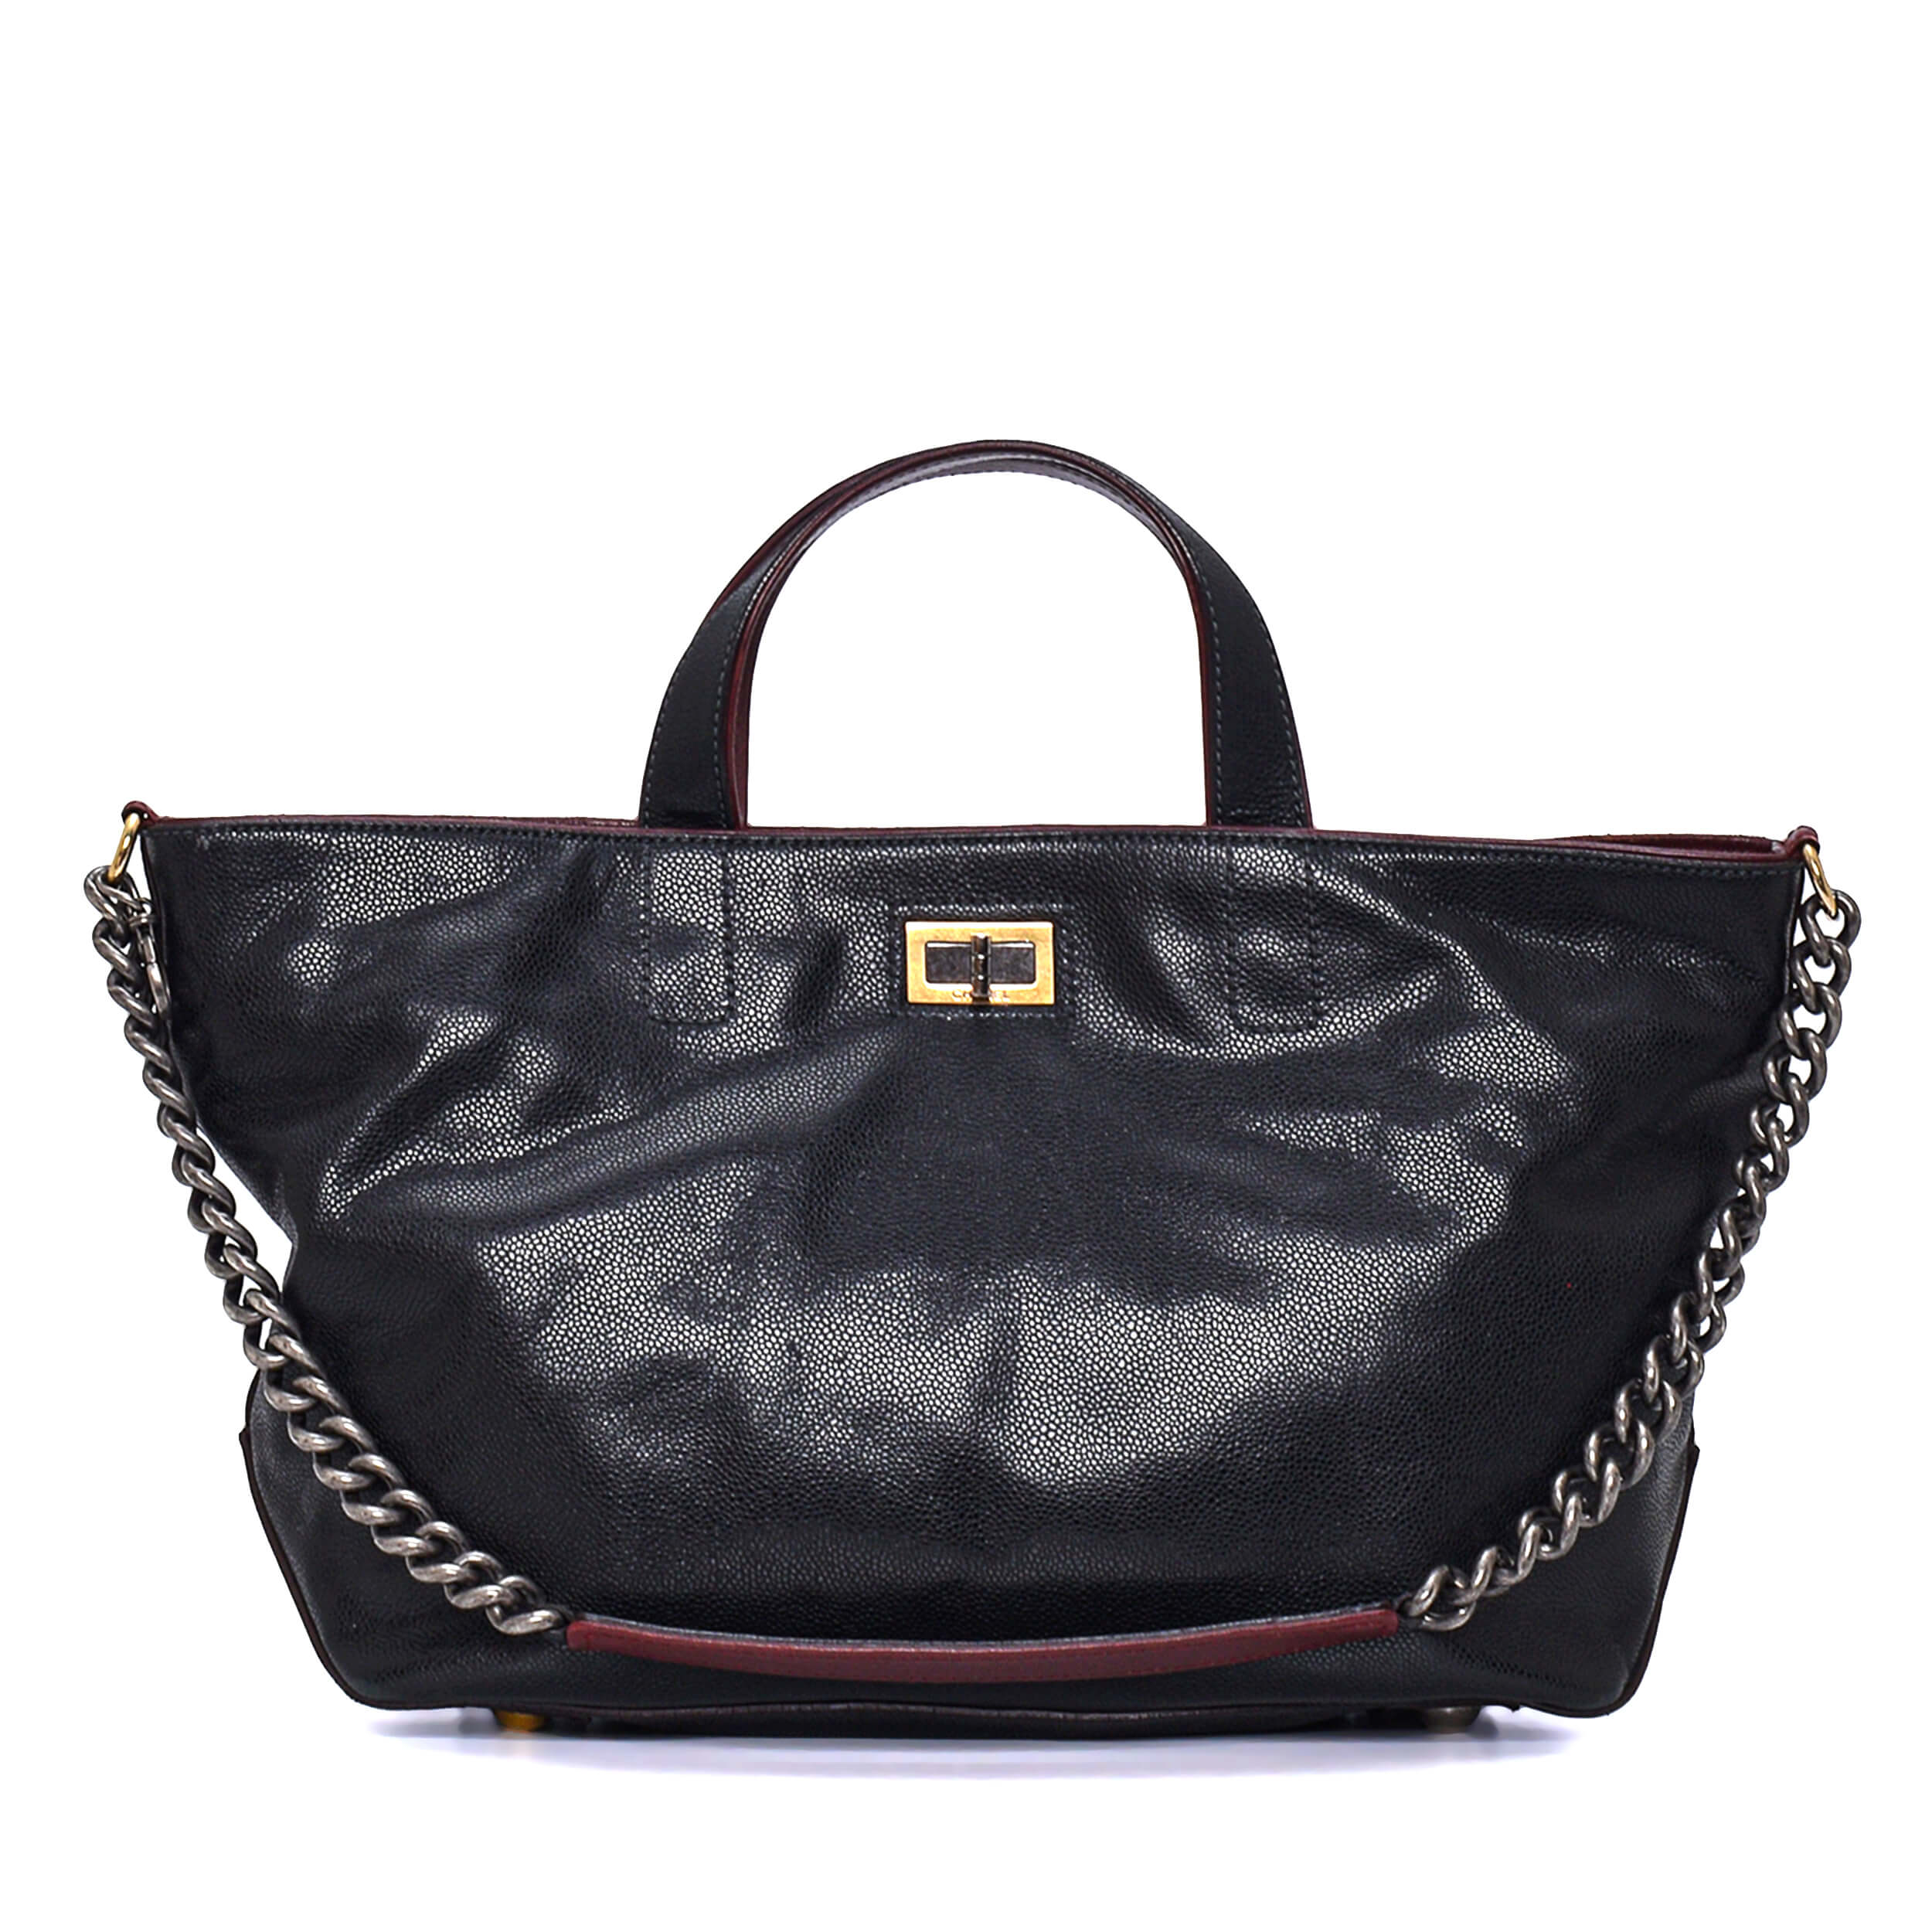 Chanel - Black Caviar Leather Reissue Trapeze Top Handle Bag